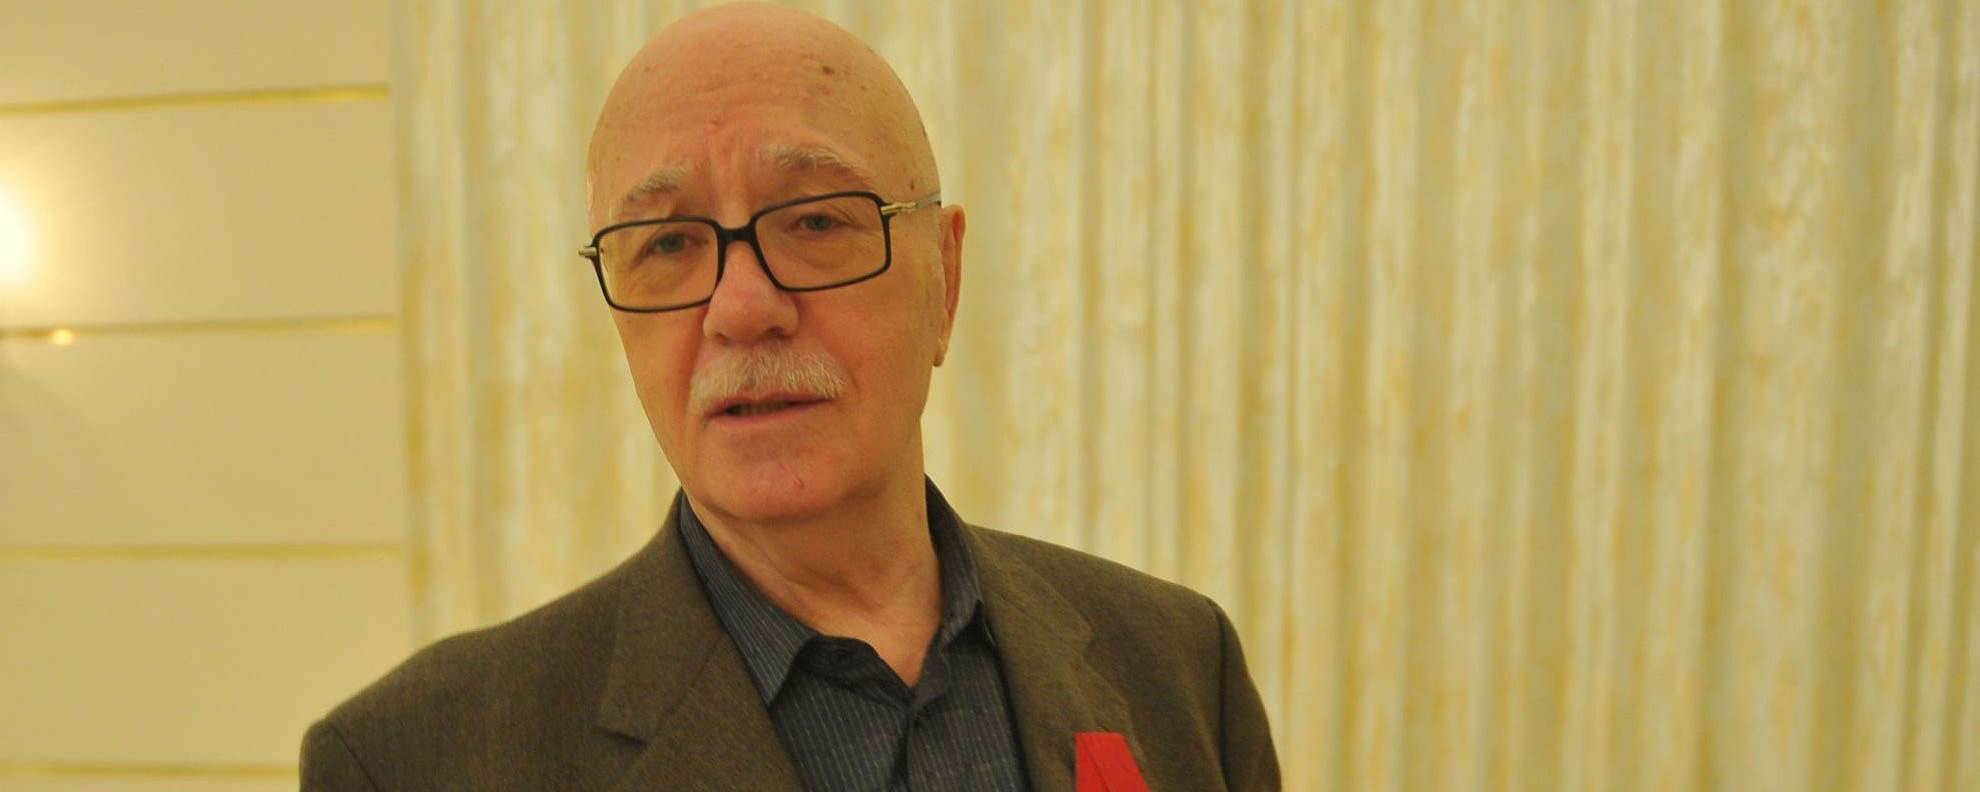 85-летний Леонид Куравлев умер от остановки сердца - Видео